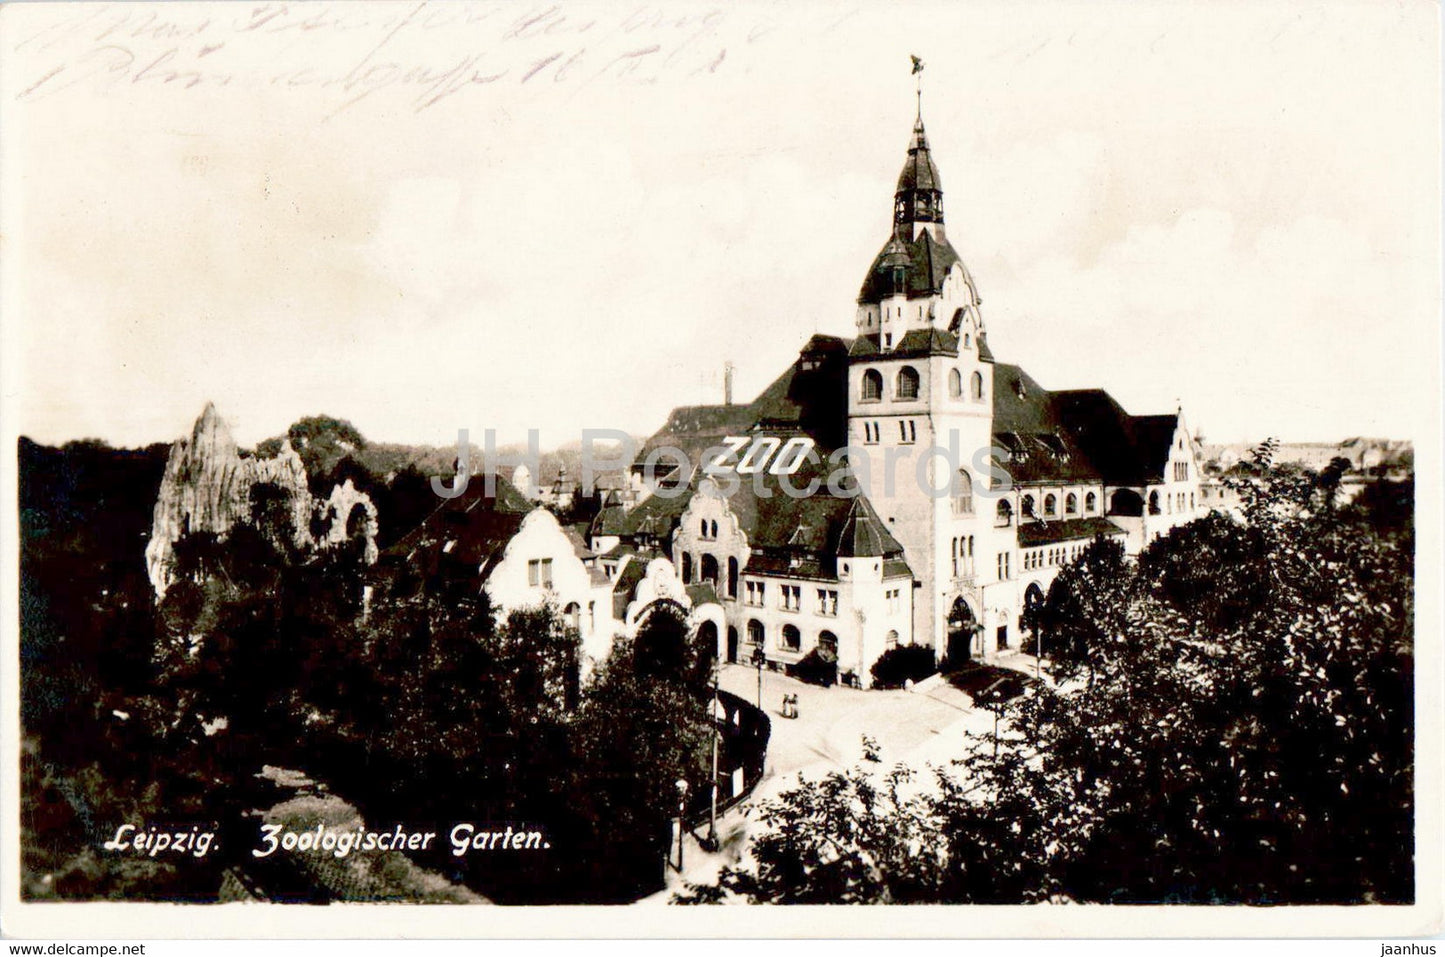 Leipzig - Zoologischer Garten - Zoo - old postcard - 1928 - Germany - used - JH Postcards